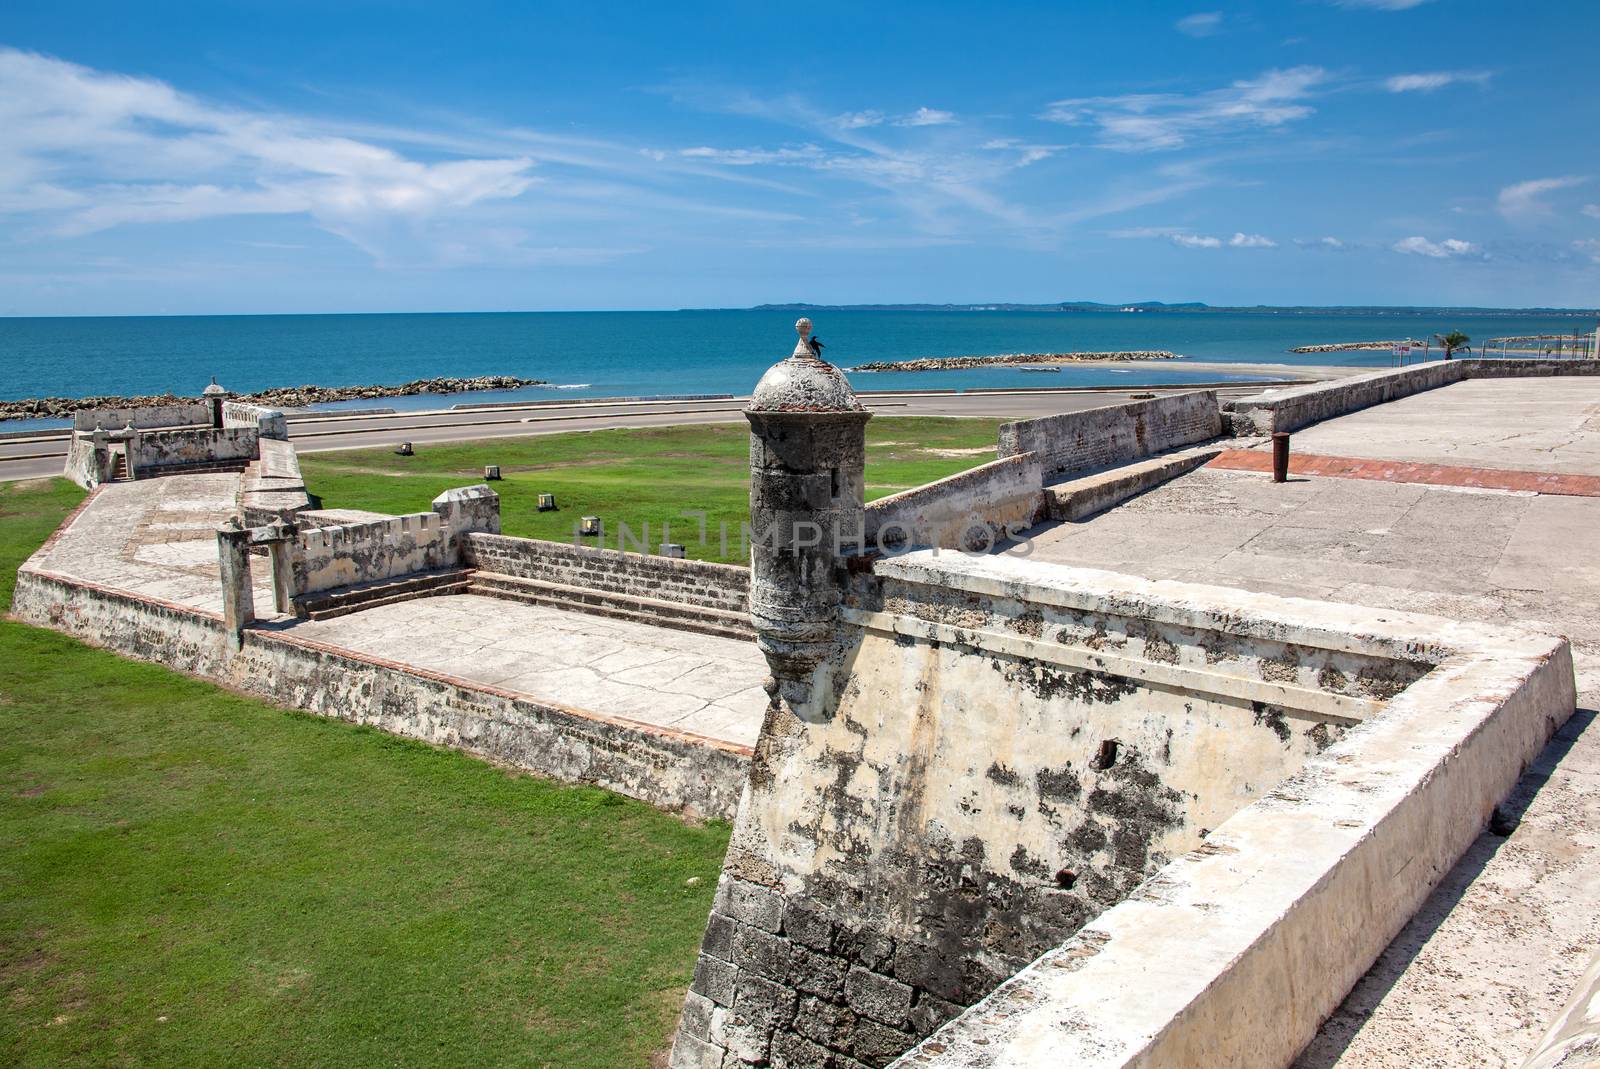 Barrier constructed as part of Cartagena's walls known as El Espigon, El espigon de la Tenaza o Tenaza de Santa Catalina